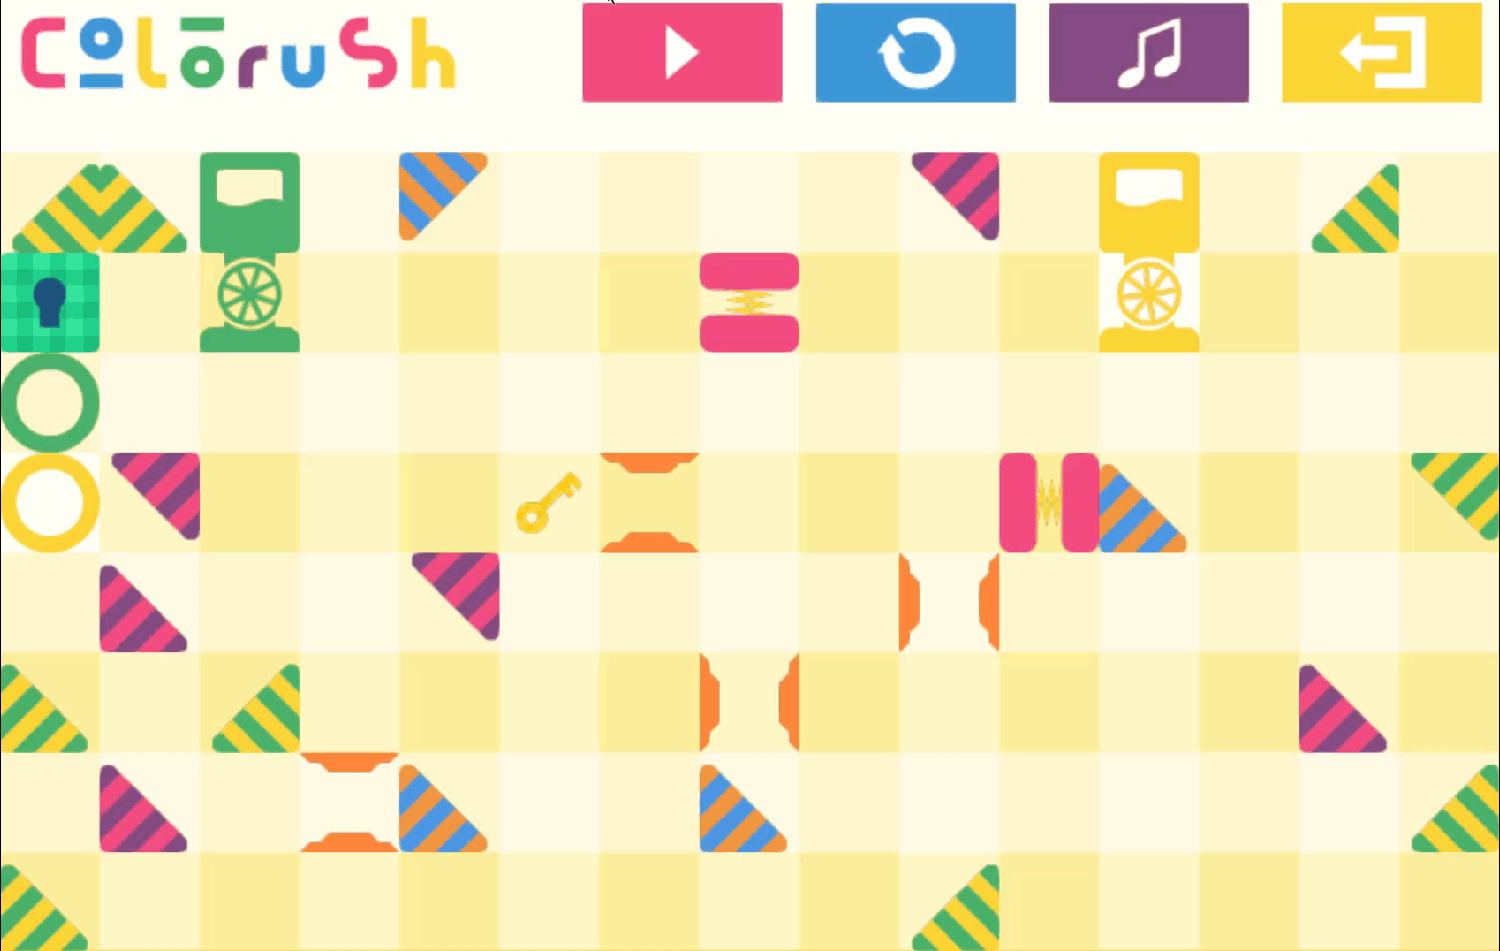 Colorush Game Level 23 Screenshot.